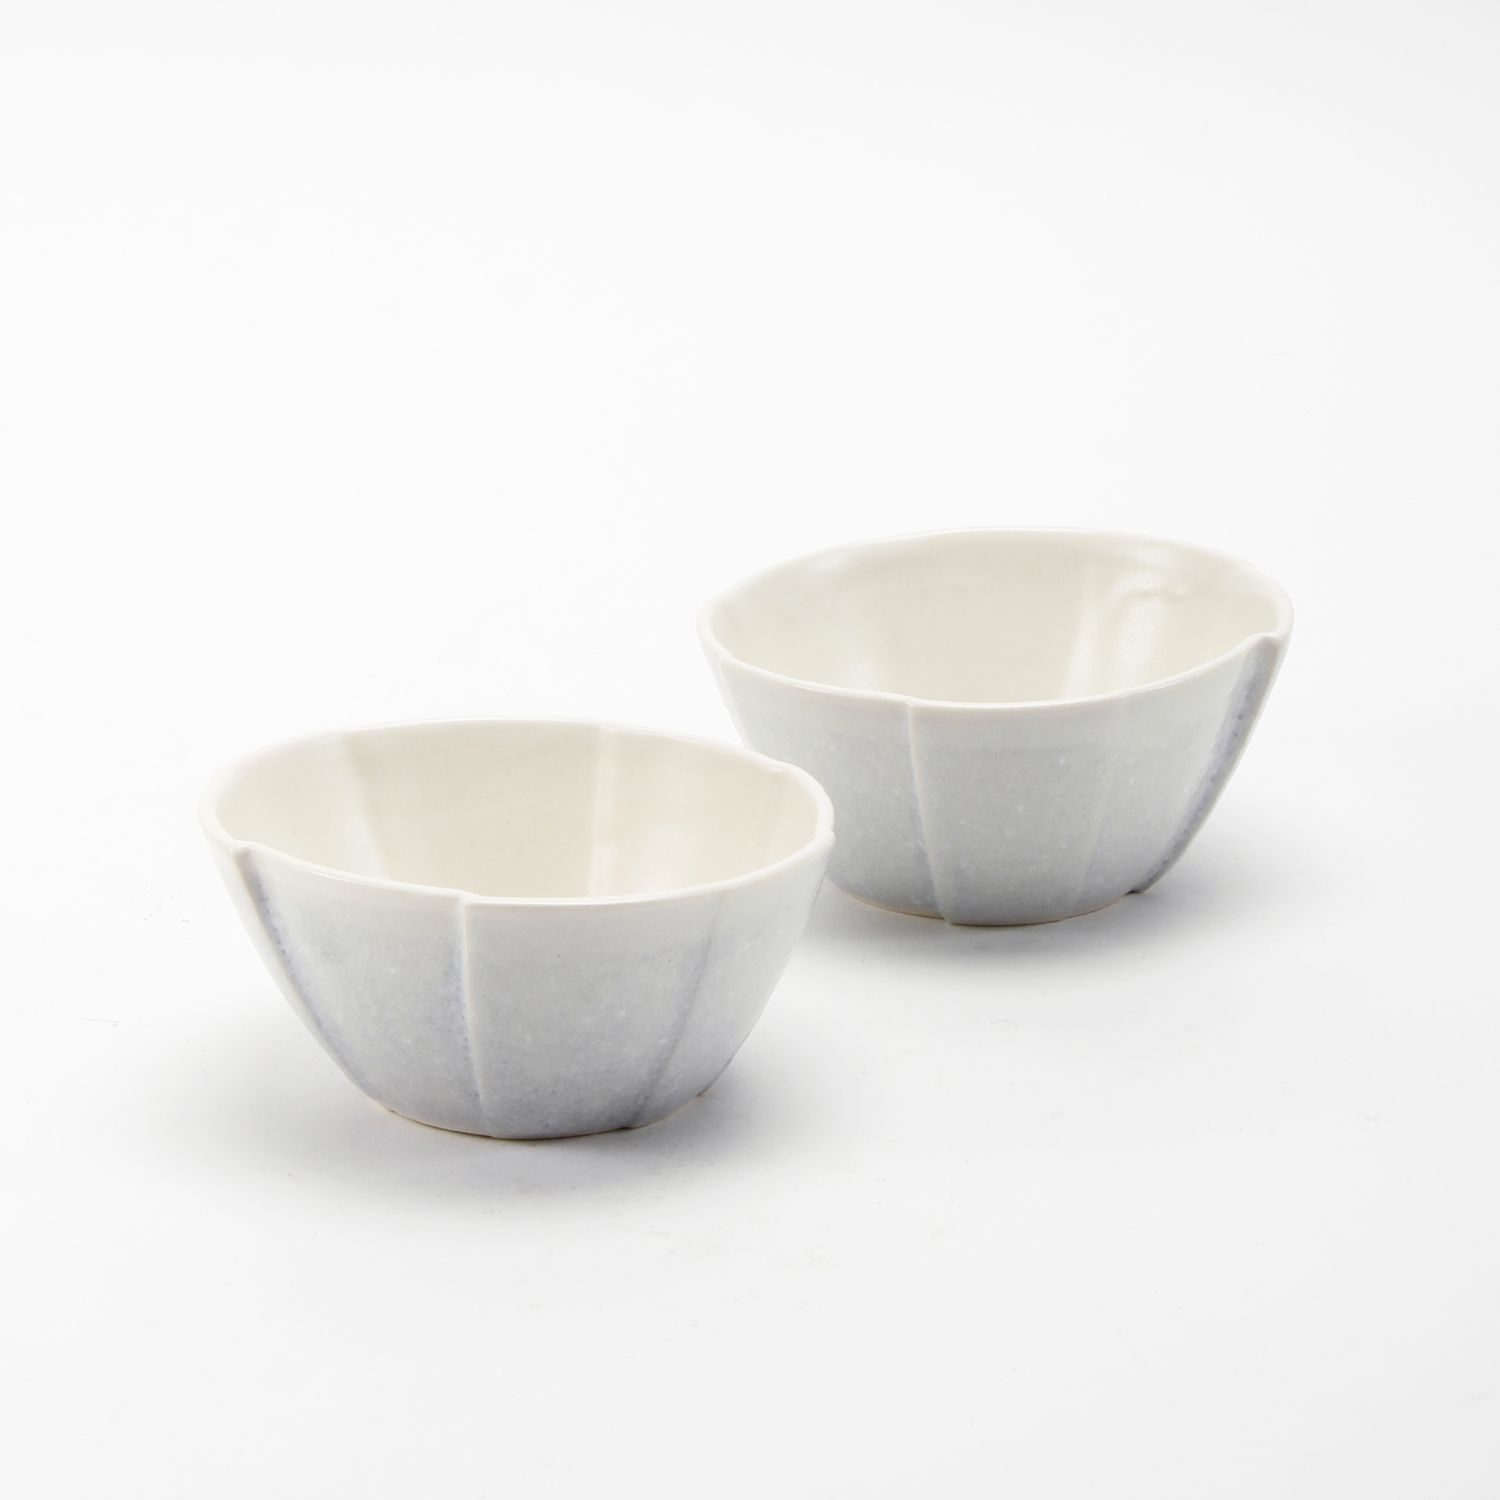 Karla Rivera: Small Bowl Product Image 1 of 3